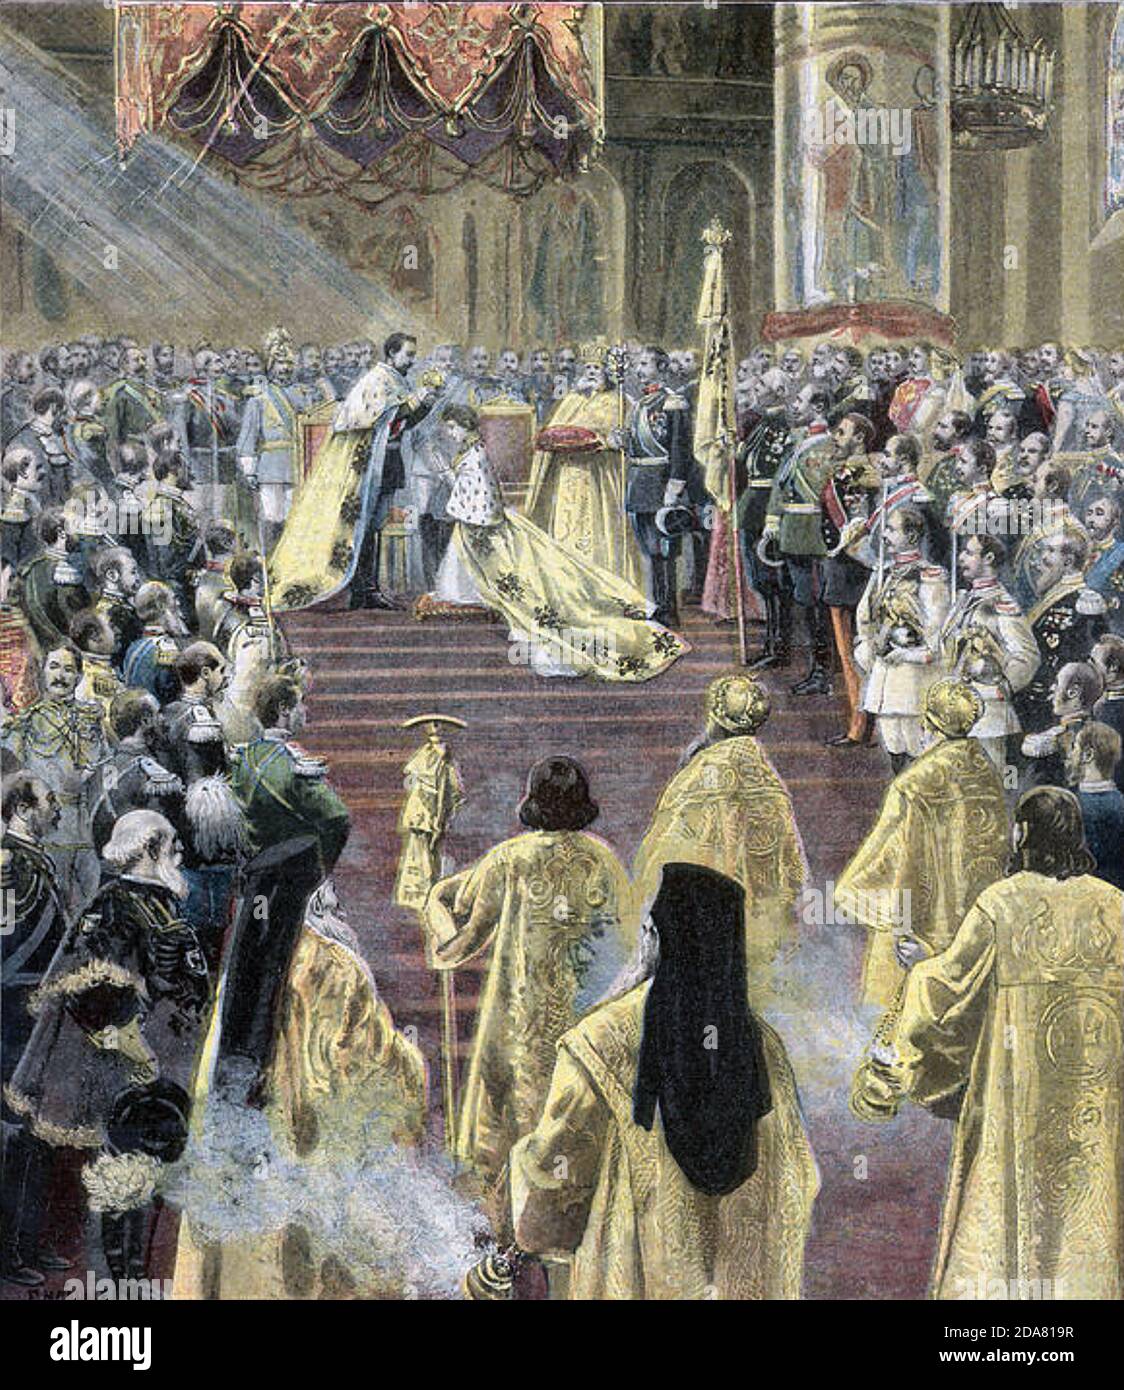 TSAR NICHOLAS II and Alexandra Feodorovna at their Coronation on 26 May 1896 in the Uspensky Cathedral inside the Kremlin Stock Photo